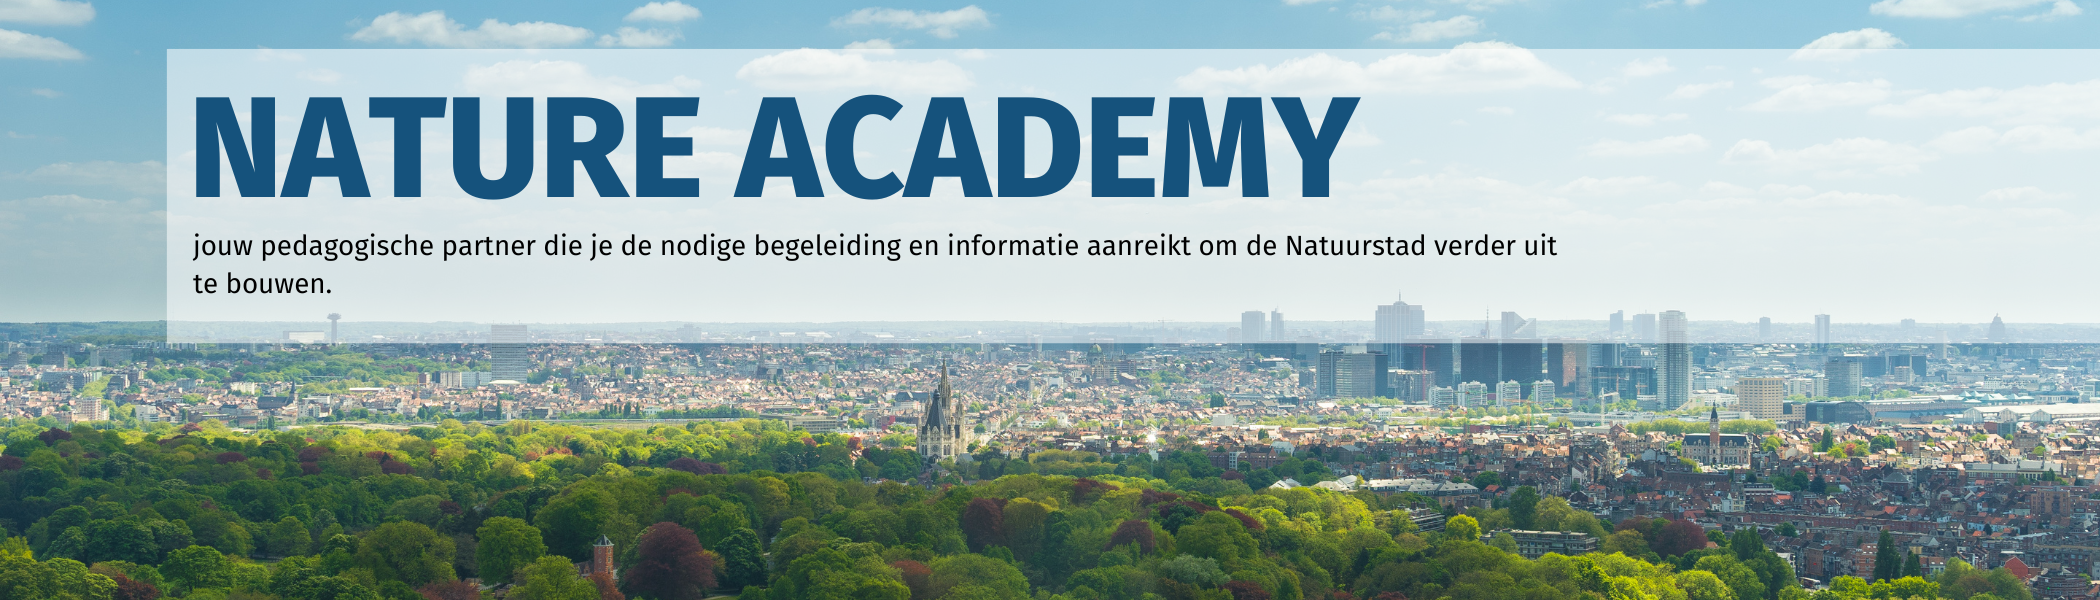 Nature Academy